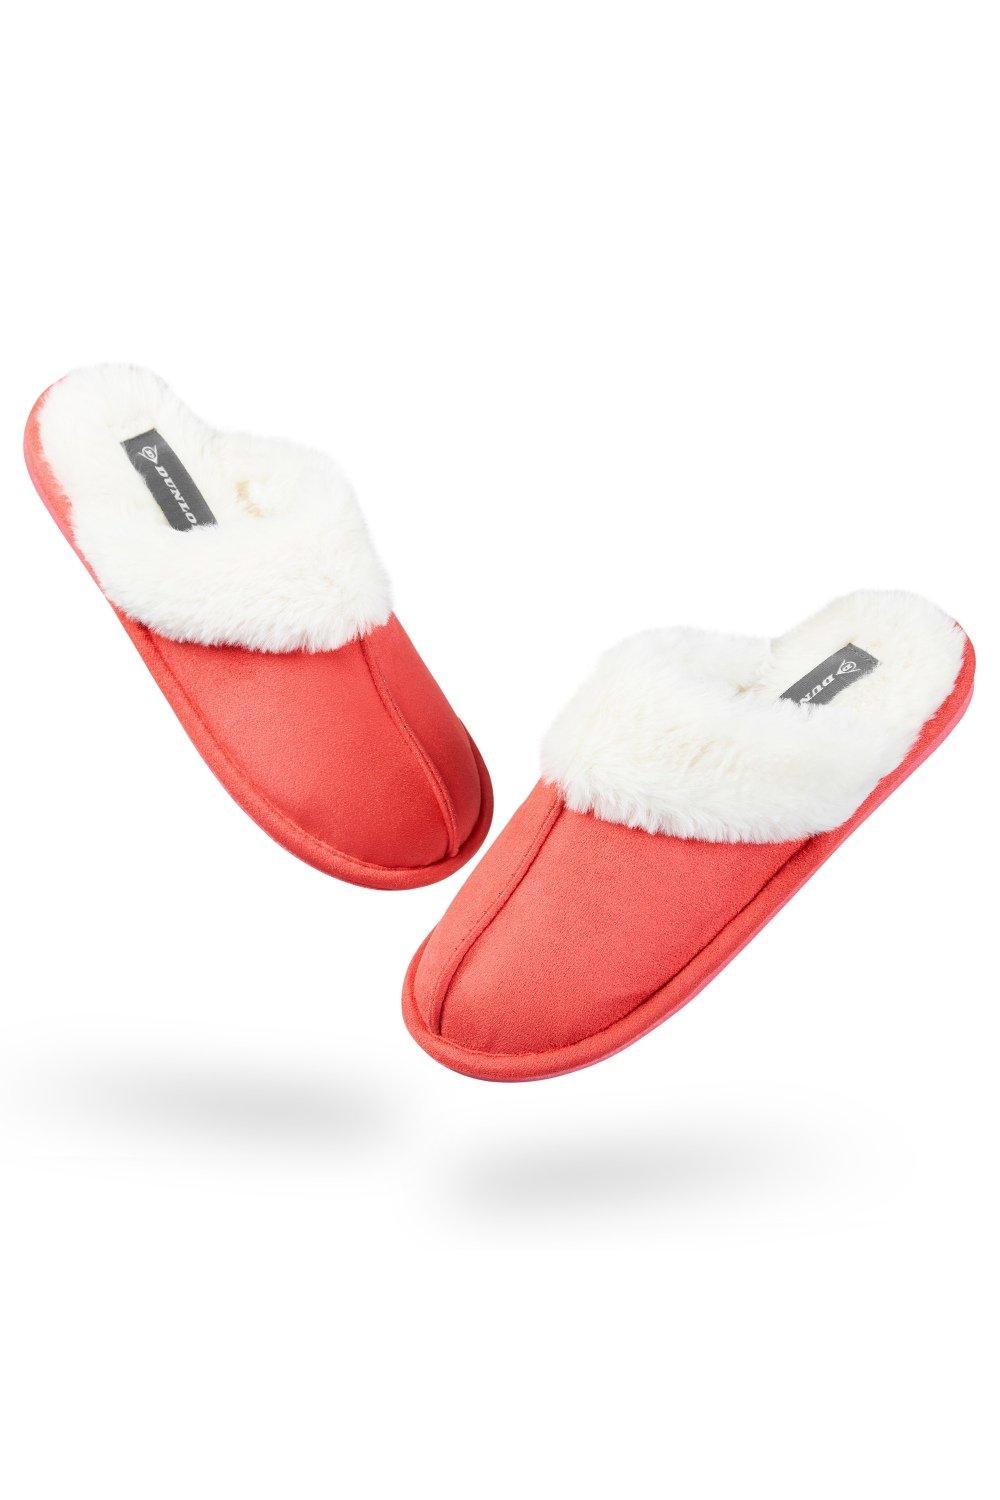 winter ladies cotton slippers simple color matching comfortable cotton slippers women flat slippers women furry slippers women Домашние пушистые тапочки на толстой меховой подкладке Dunlop, красный